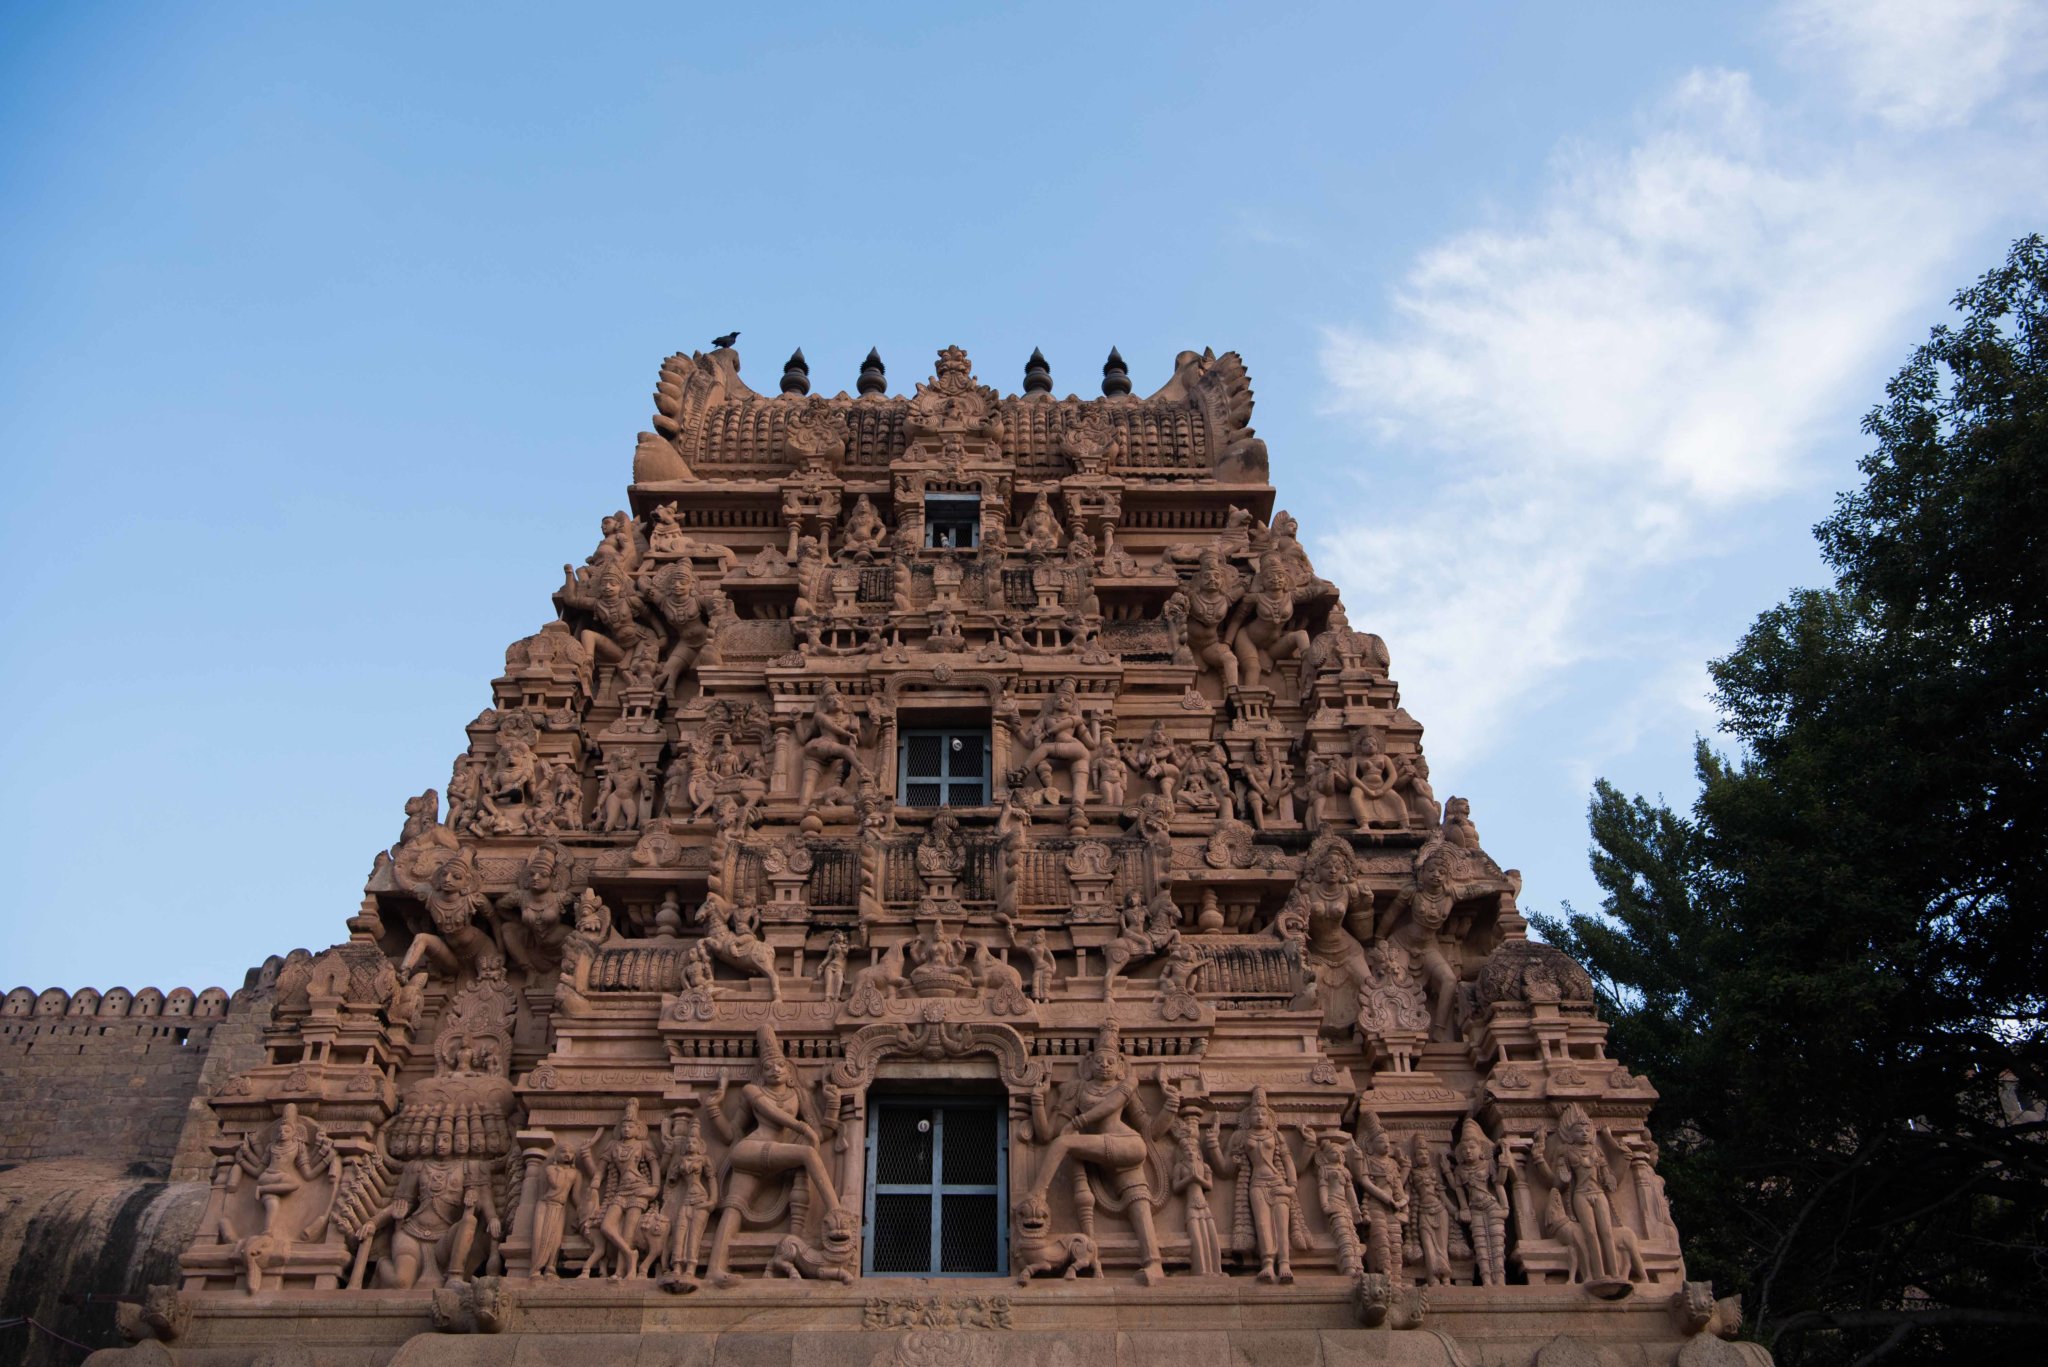 Temple Towns: Perumal Koil, Thirumayam -